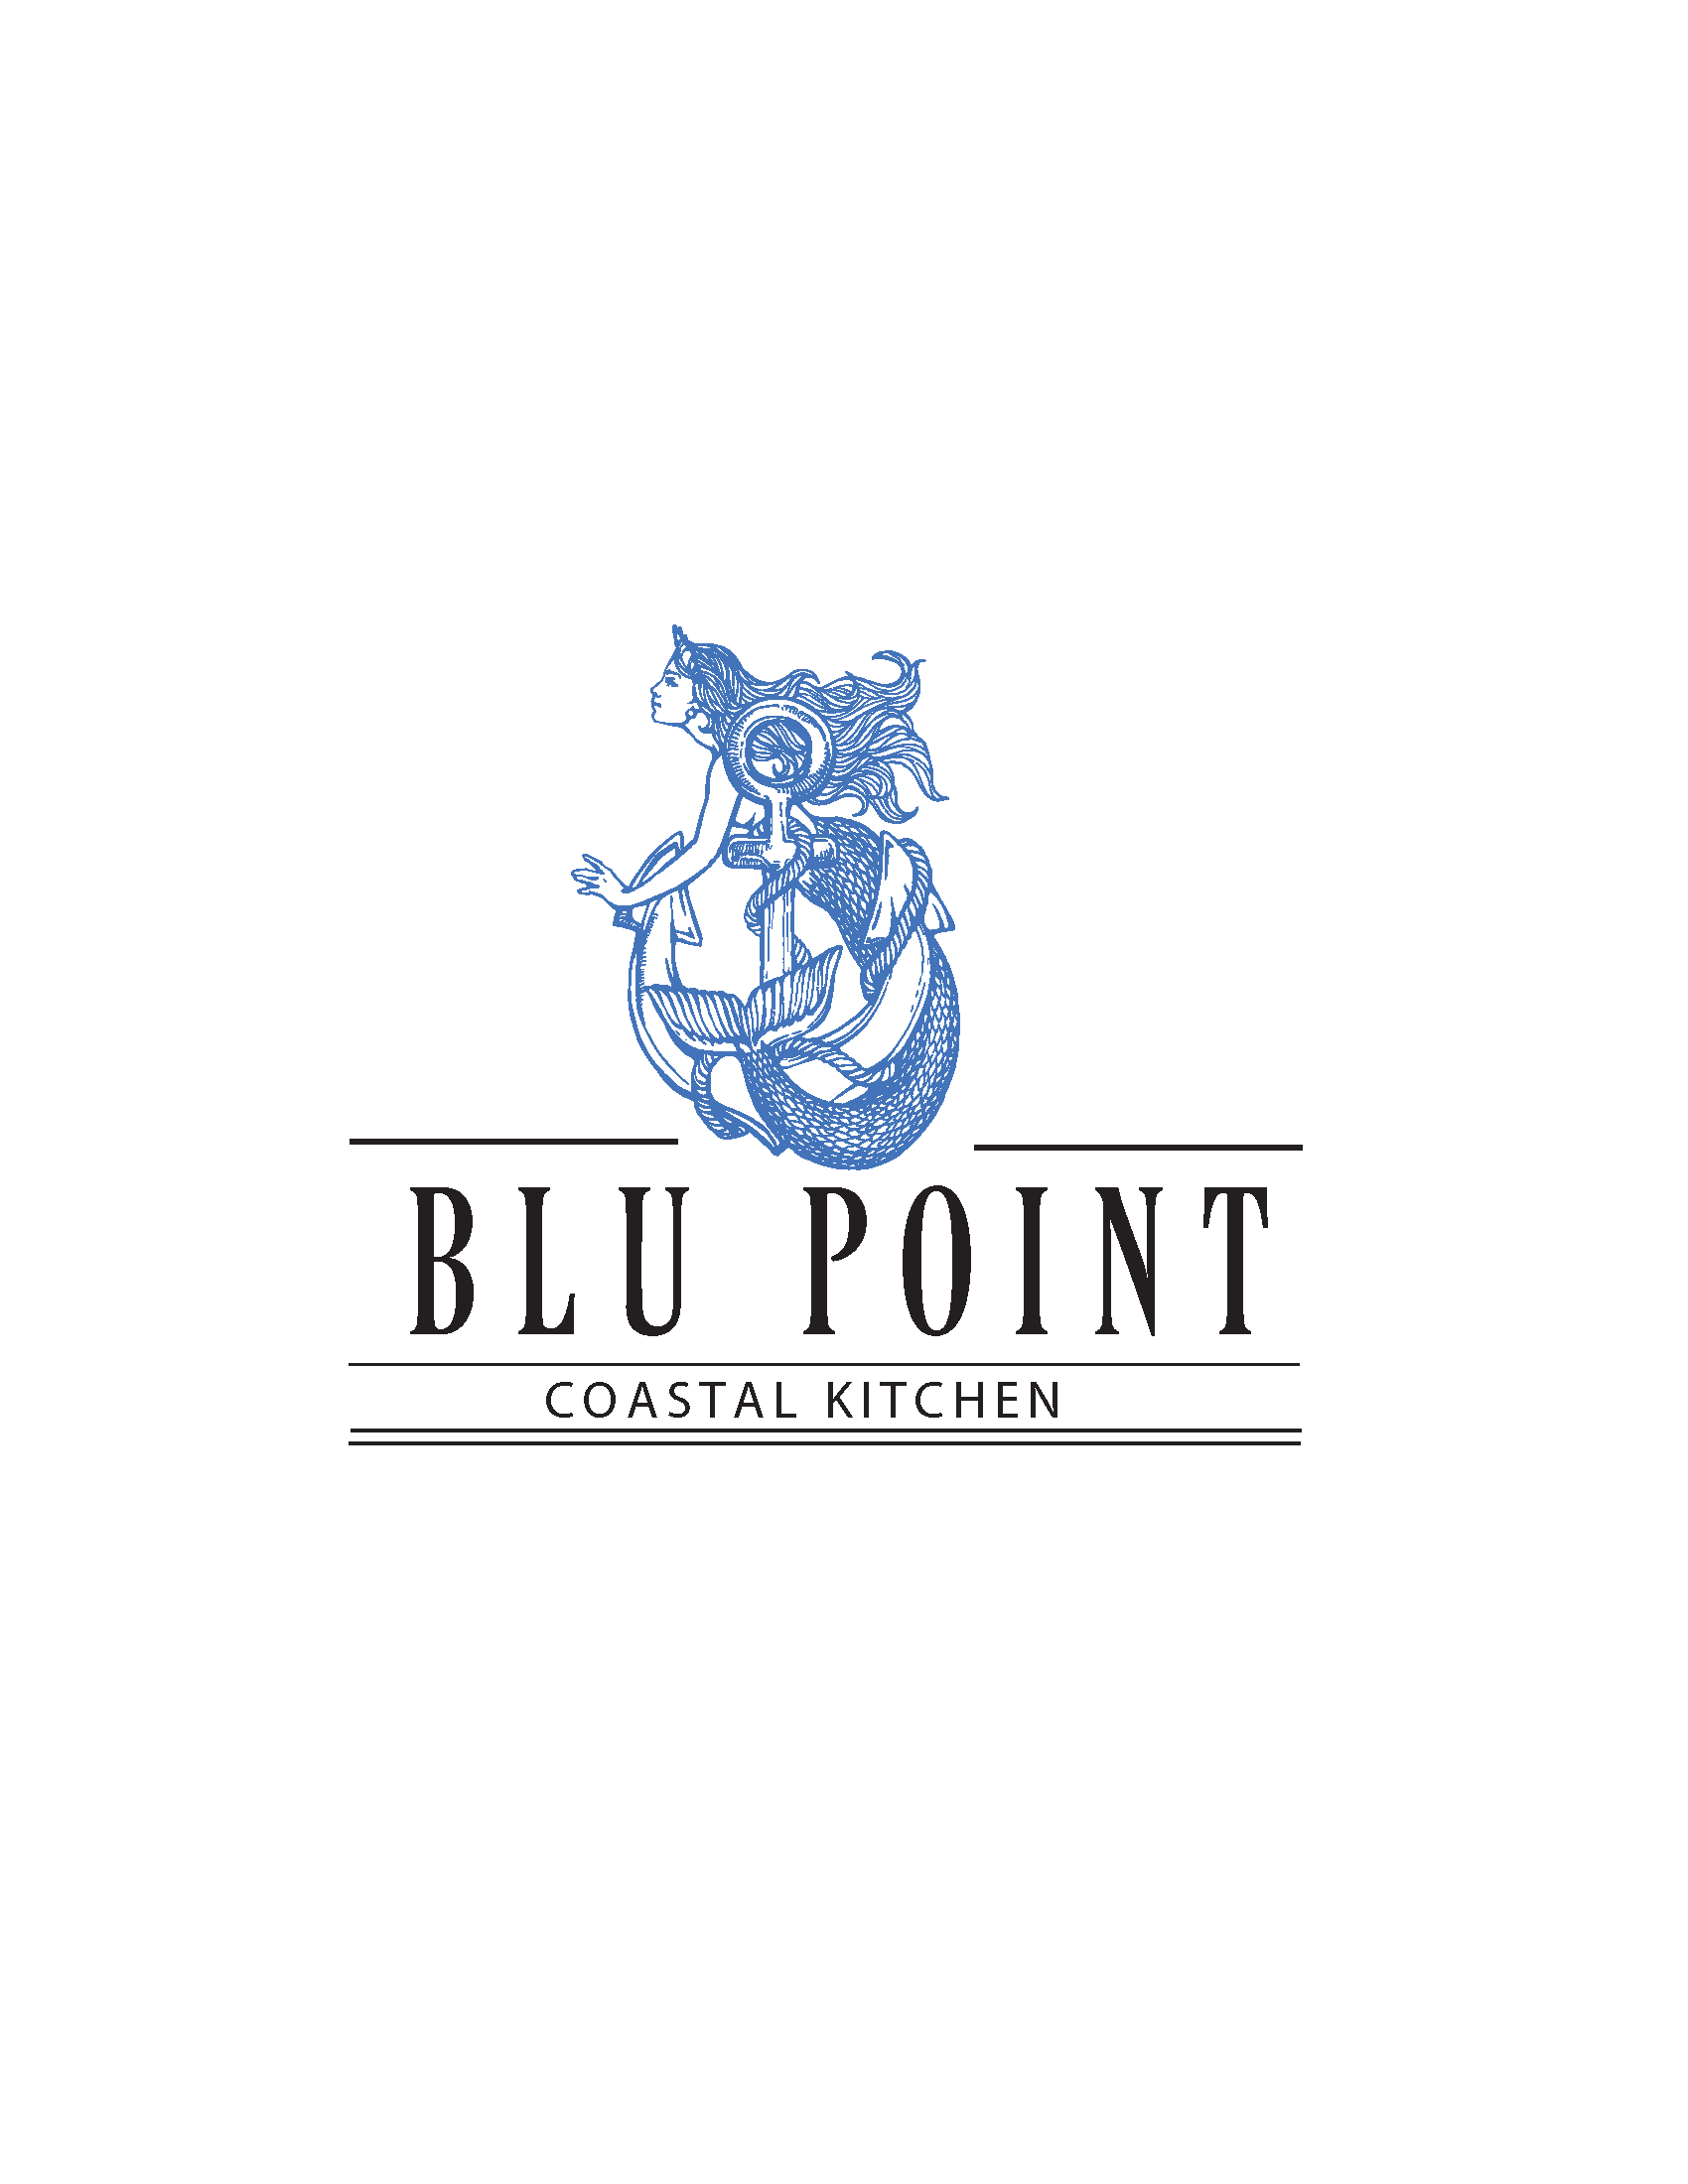 Blupoint Coastal Kitchen logo